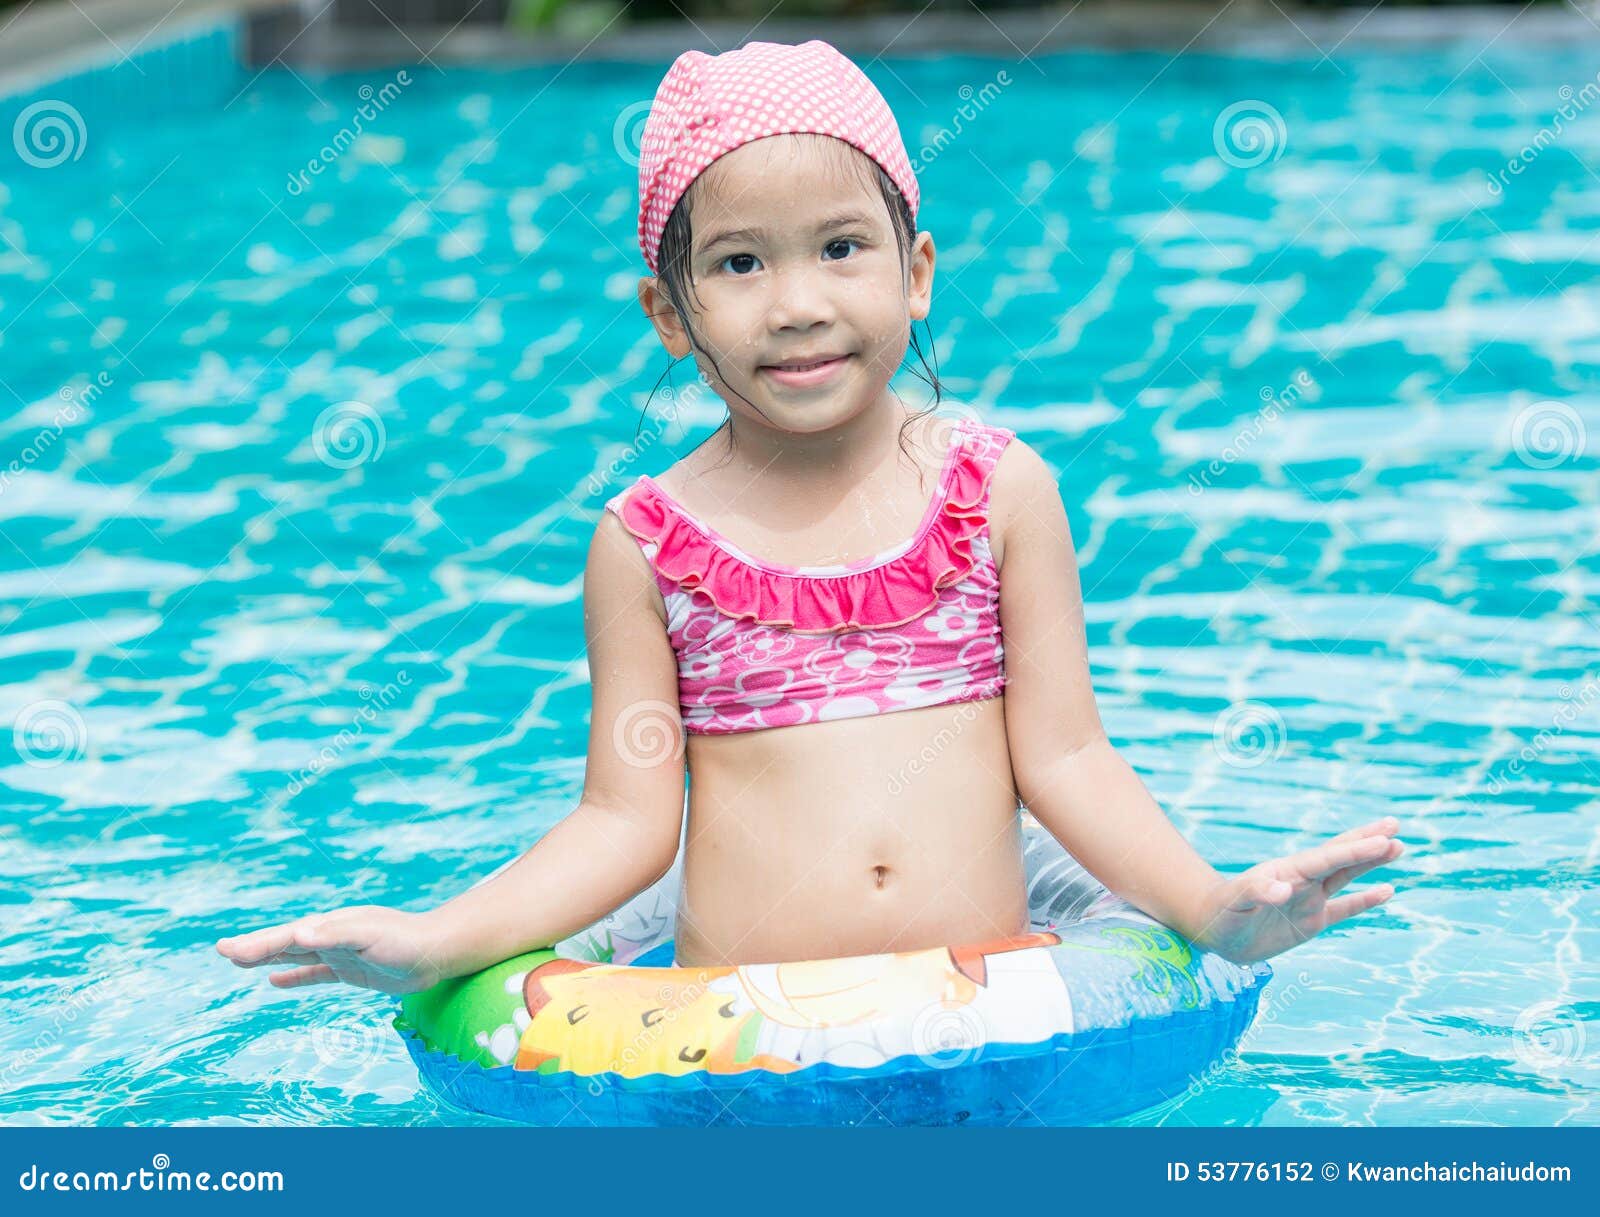 2021 Little Girls Bikini Set Kids Two Pieces Swim Suit Swimsuits